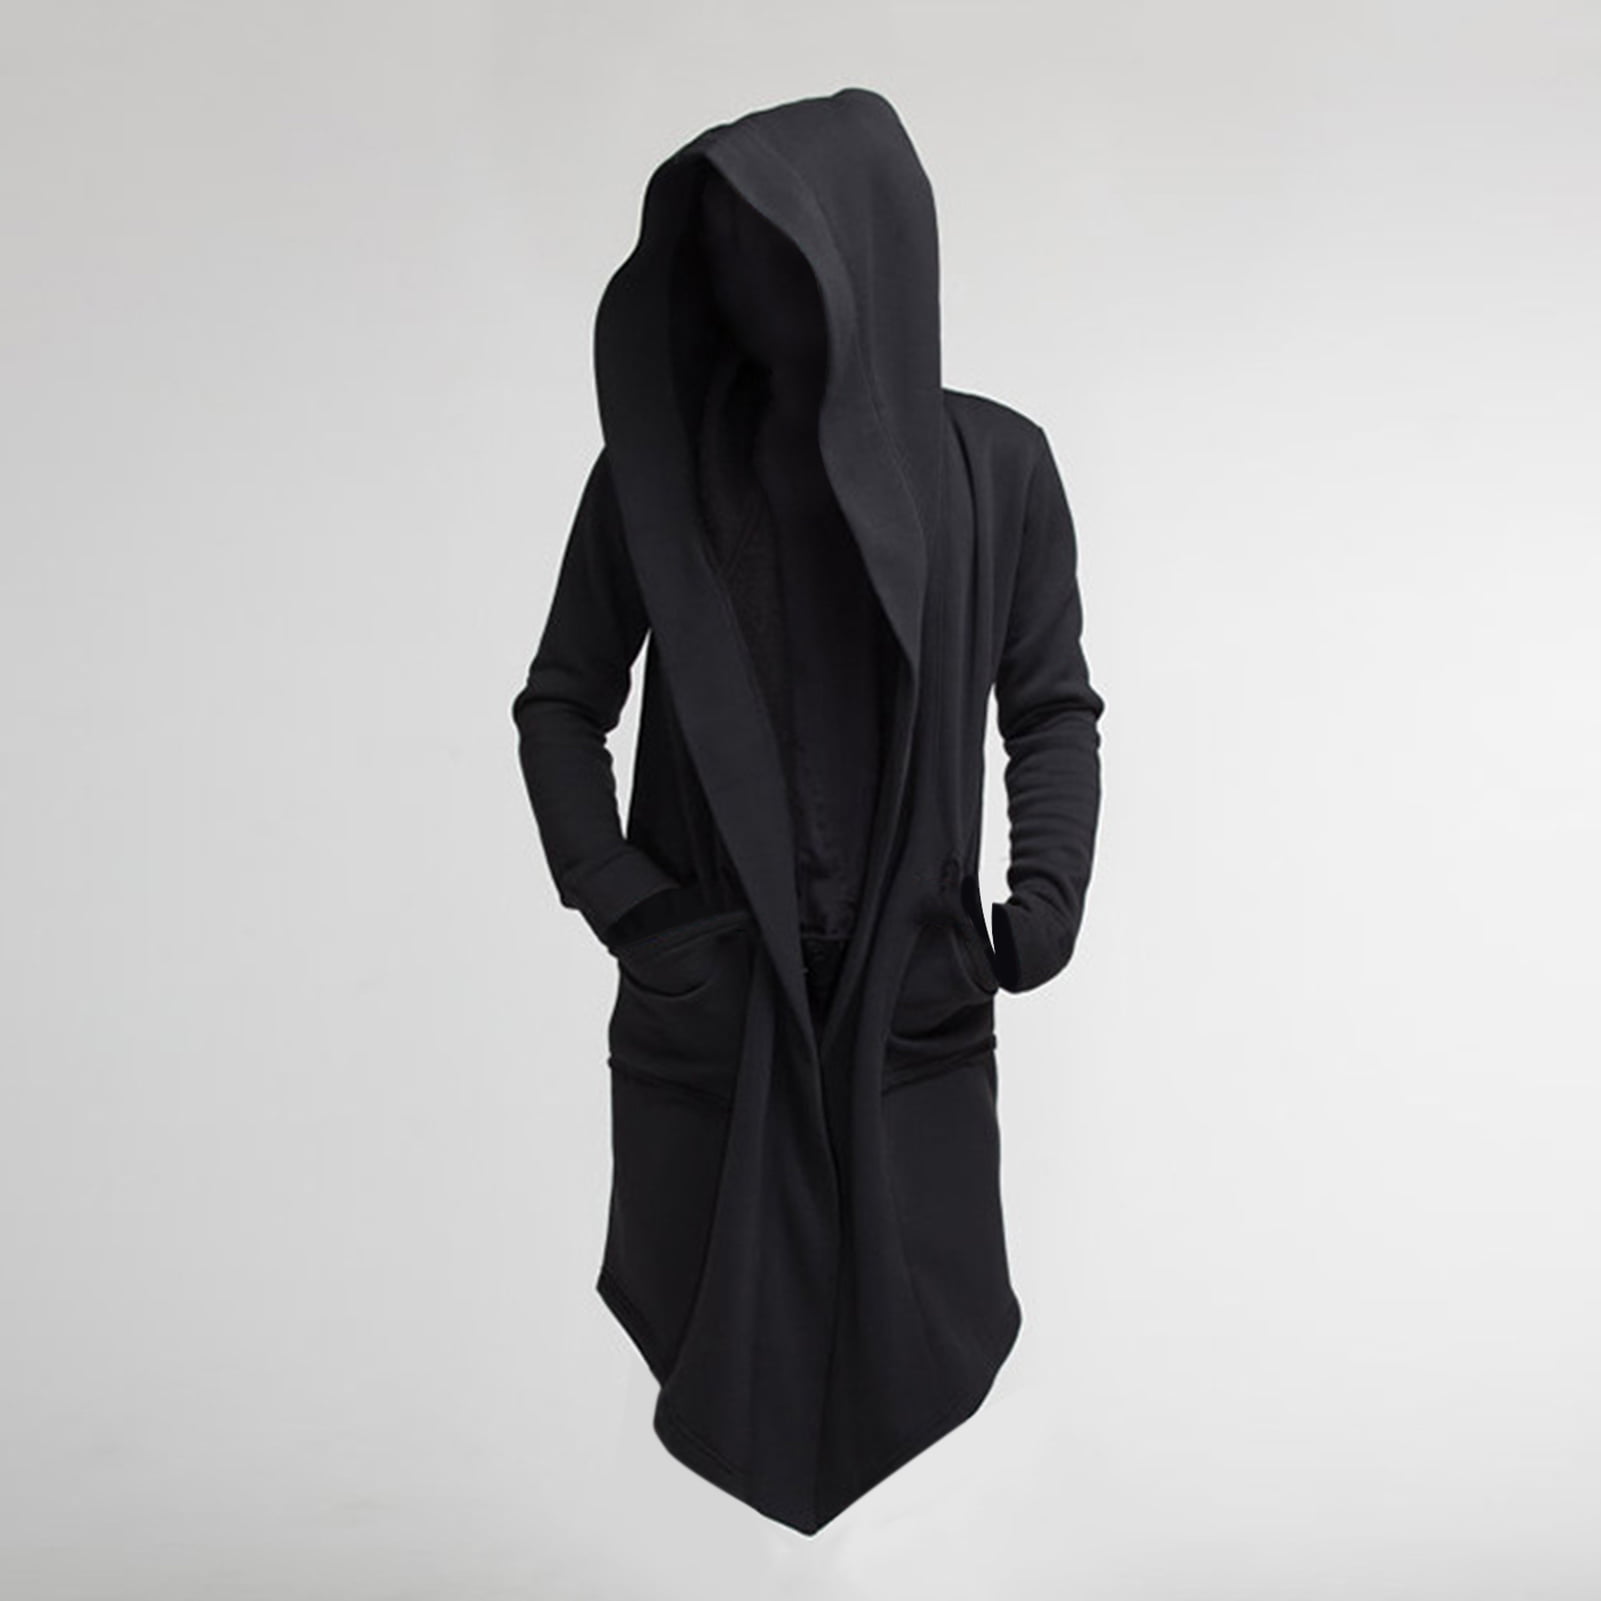 Men Super Long Trench Coat Oversize Hooded Cape Cloak Jacket Mantle Outwear  2020